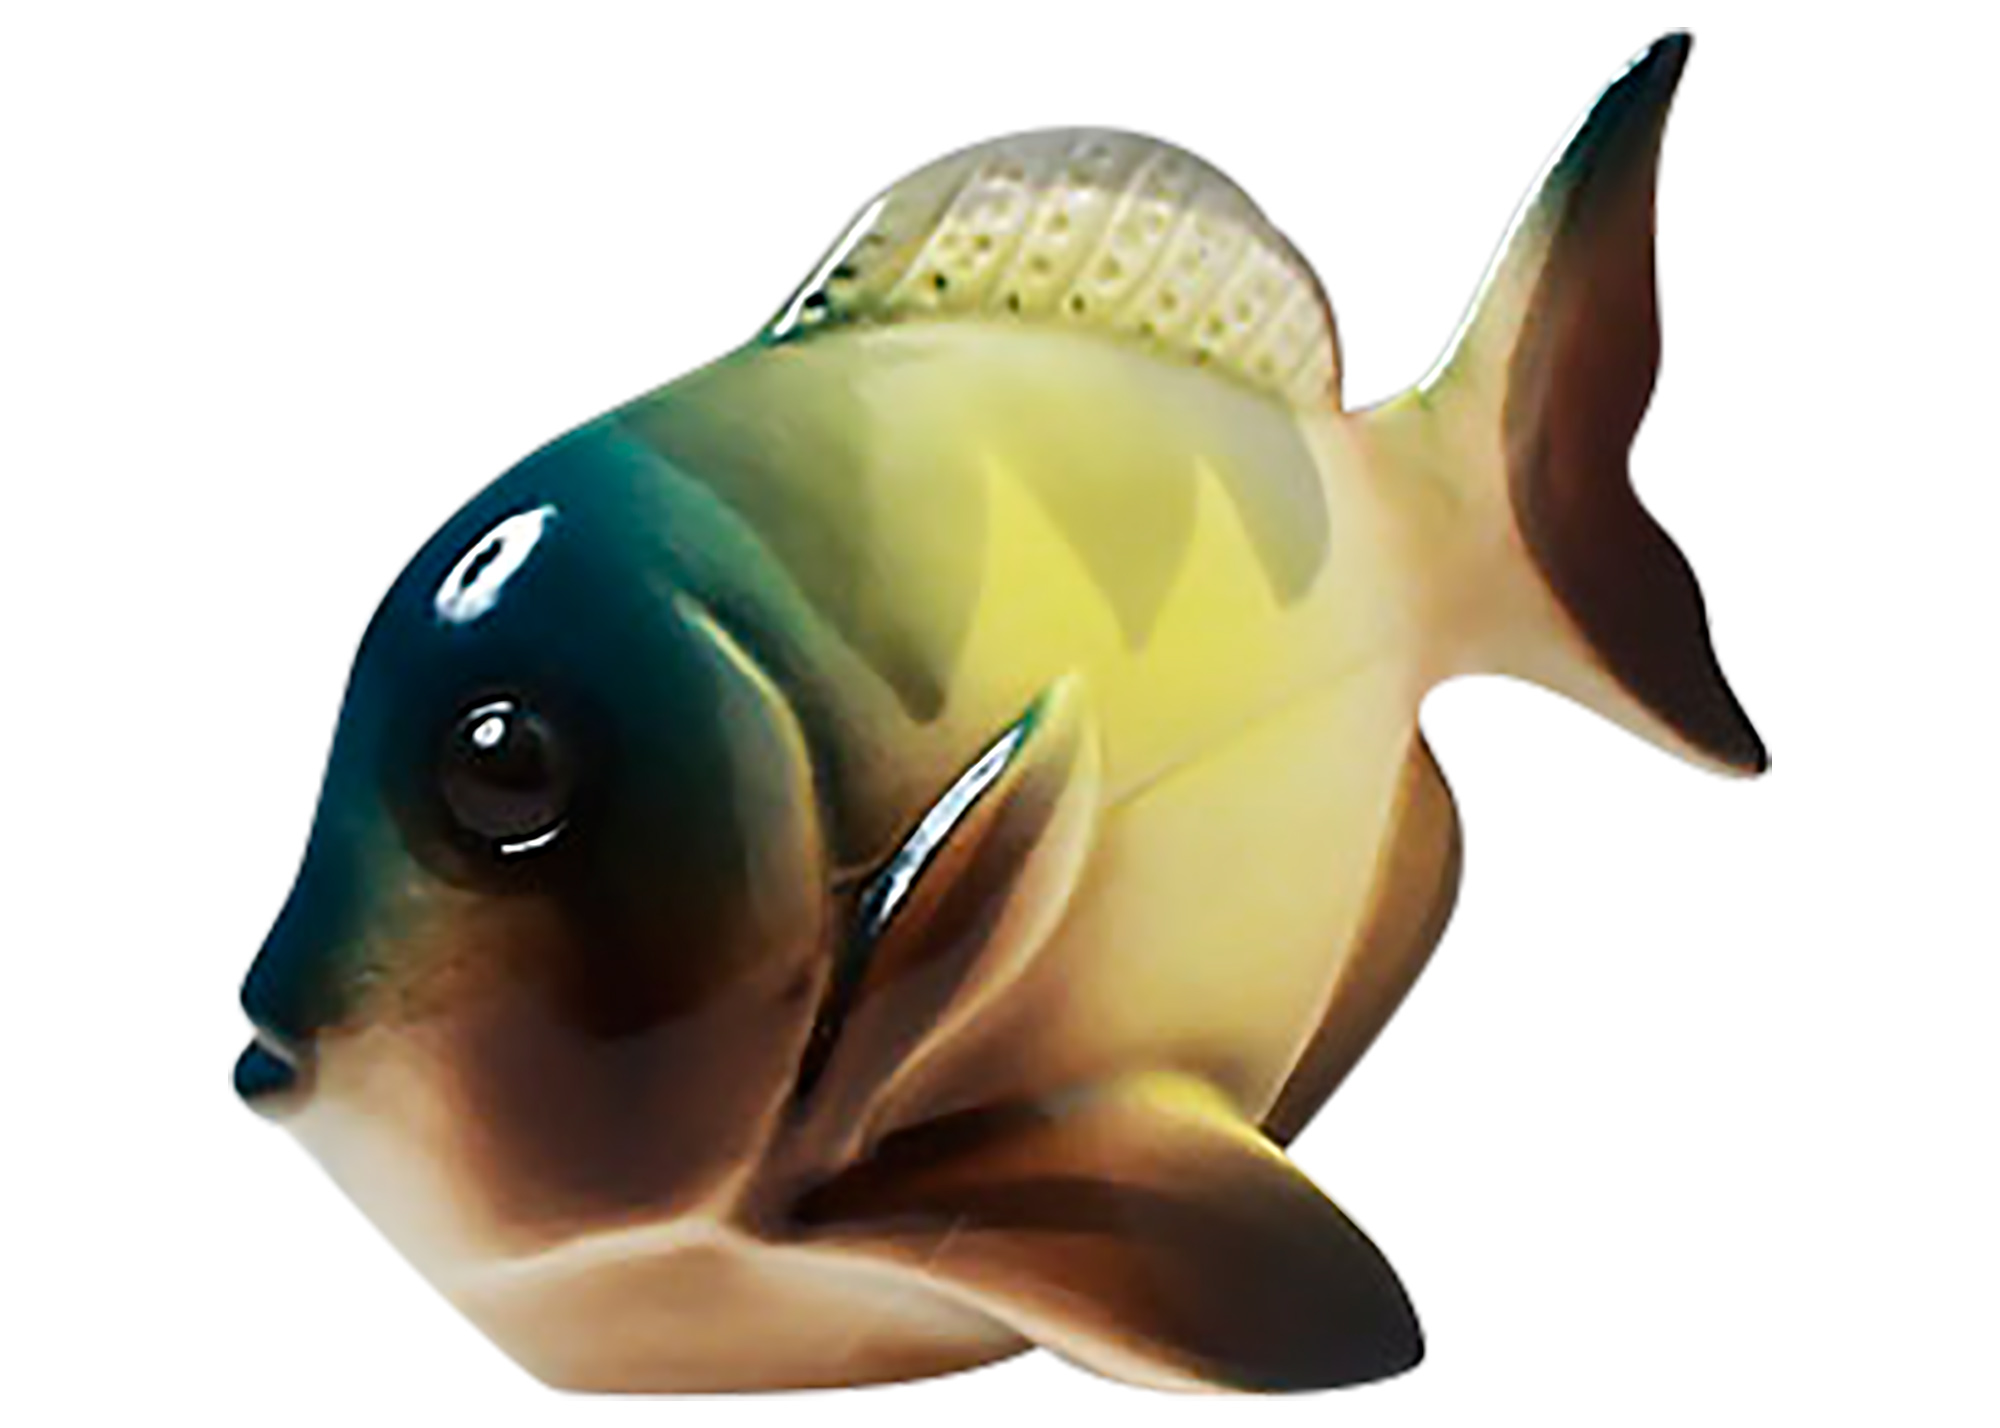 Buy Small Fish Figurine at GoldenCockerel.com